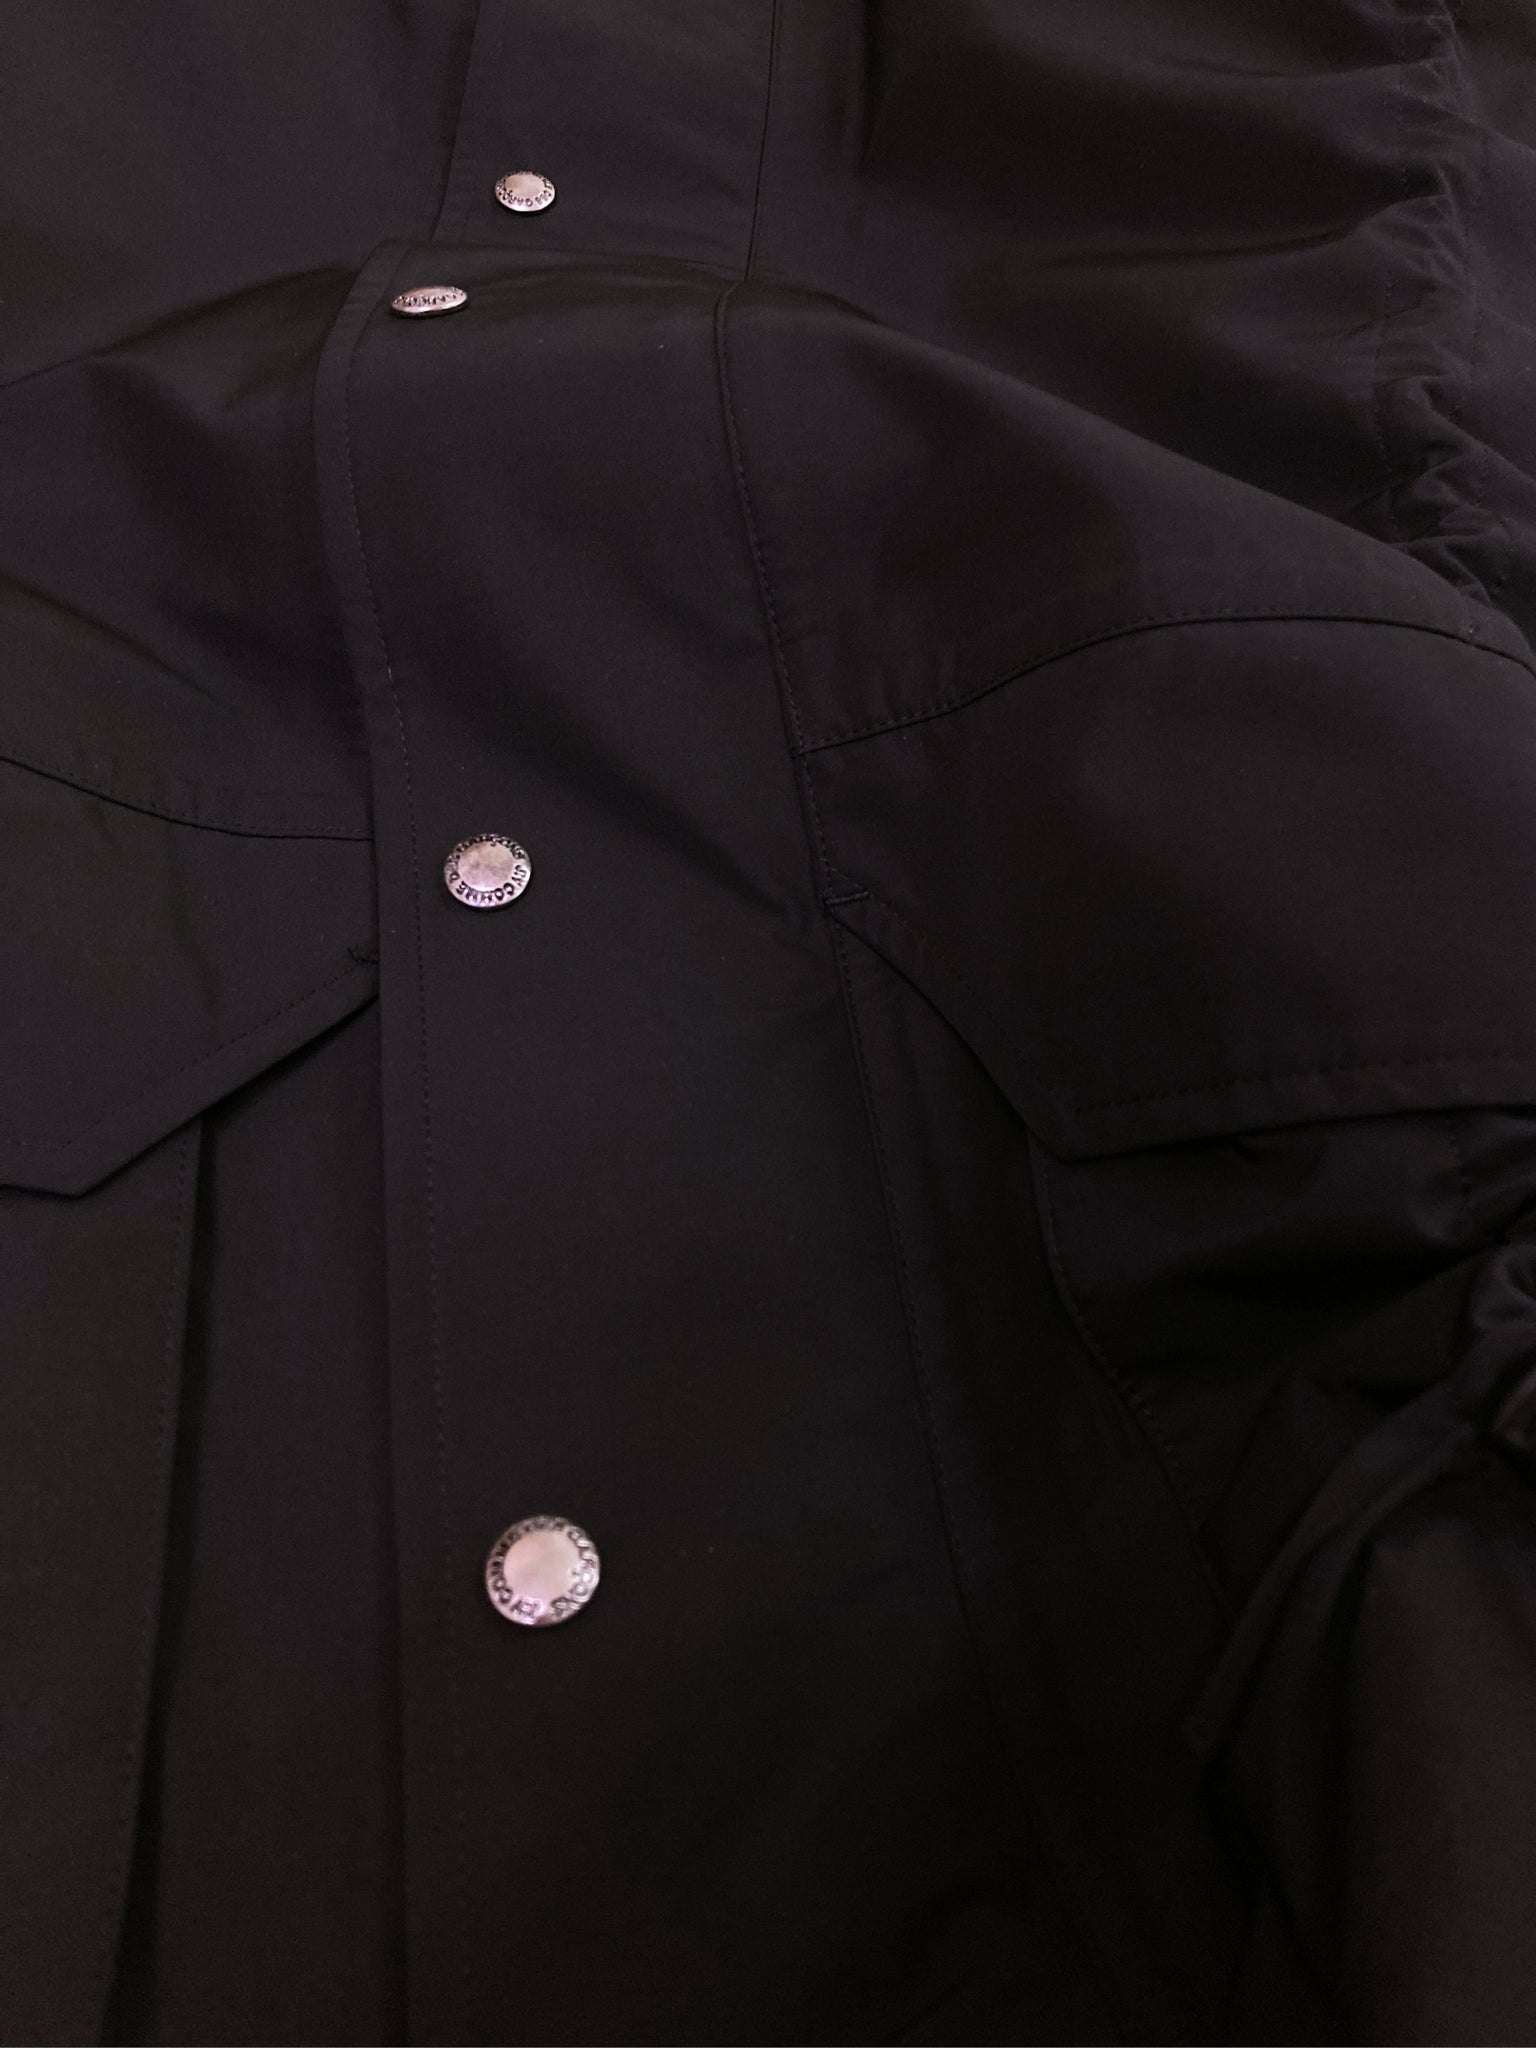 Junya Watanabe AW2005 black GORE-TEX drawstring jacket and skirt set - S M